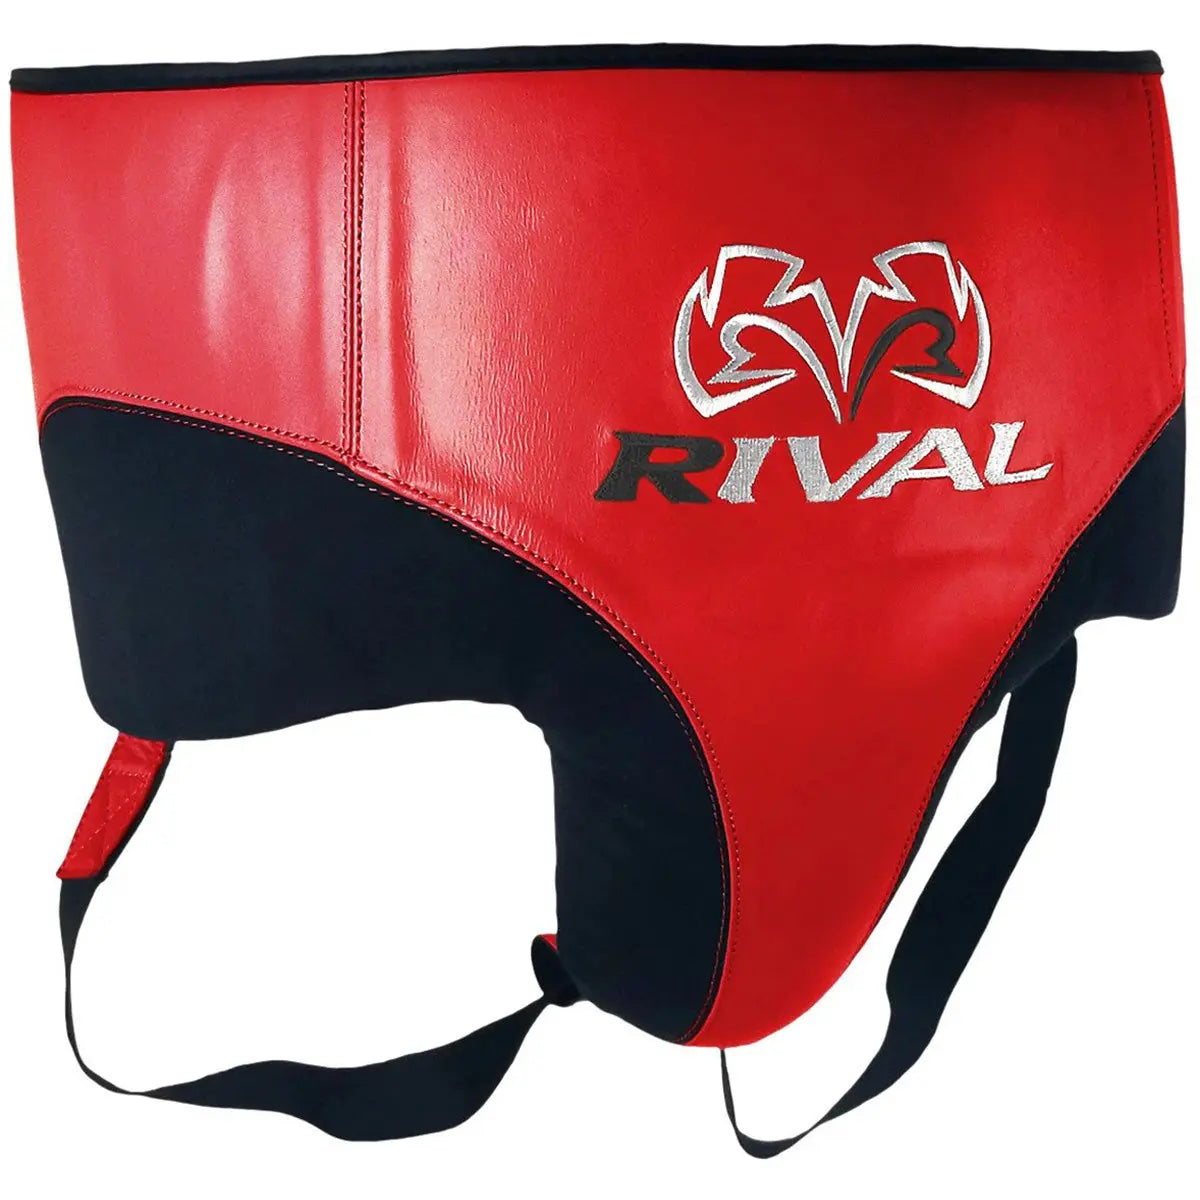 Rival Boxing 360 Pro No Foul Groin Protector RIVAL